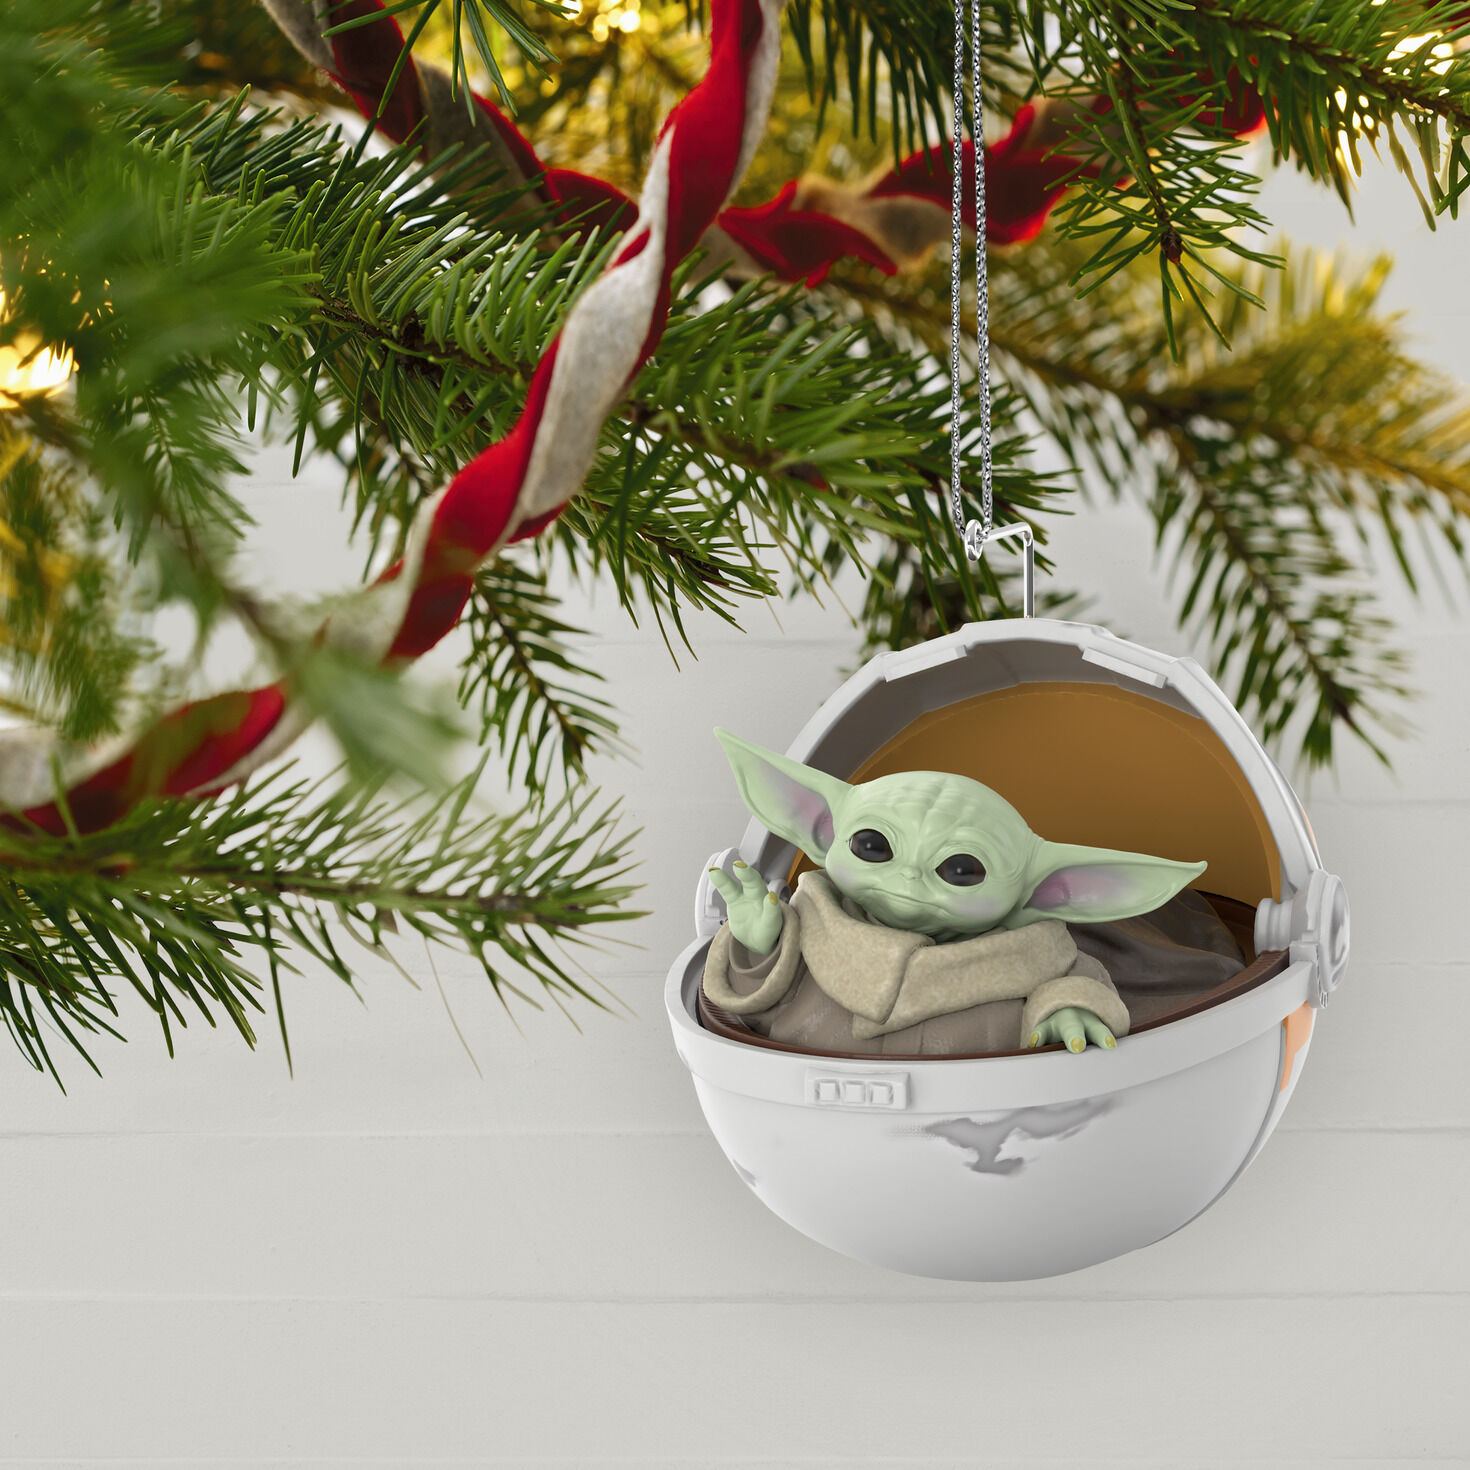 Star Wars Christmas Tree Decorations Xmas Ornament Set Present New Year Gift